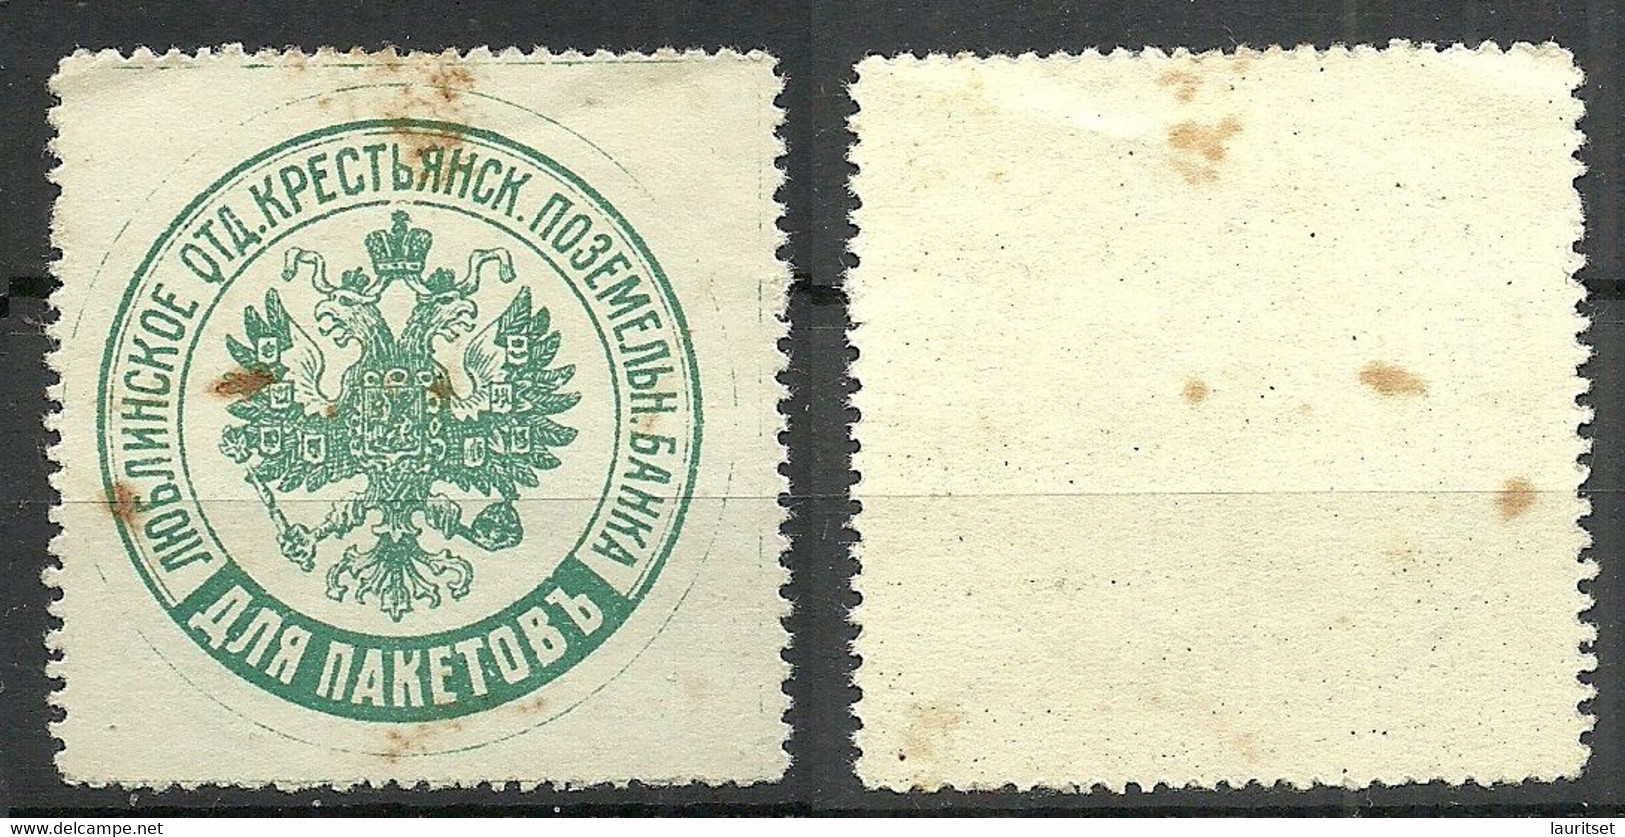 Imperial RUSSLAND RUSSIA Packet Stamp Paketenmarke Original Gum MNH Lublin Bank Poland NB! Rusty Spots! Stockfleckig! - Varietà E Curiosità